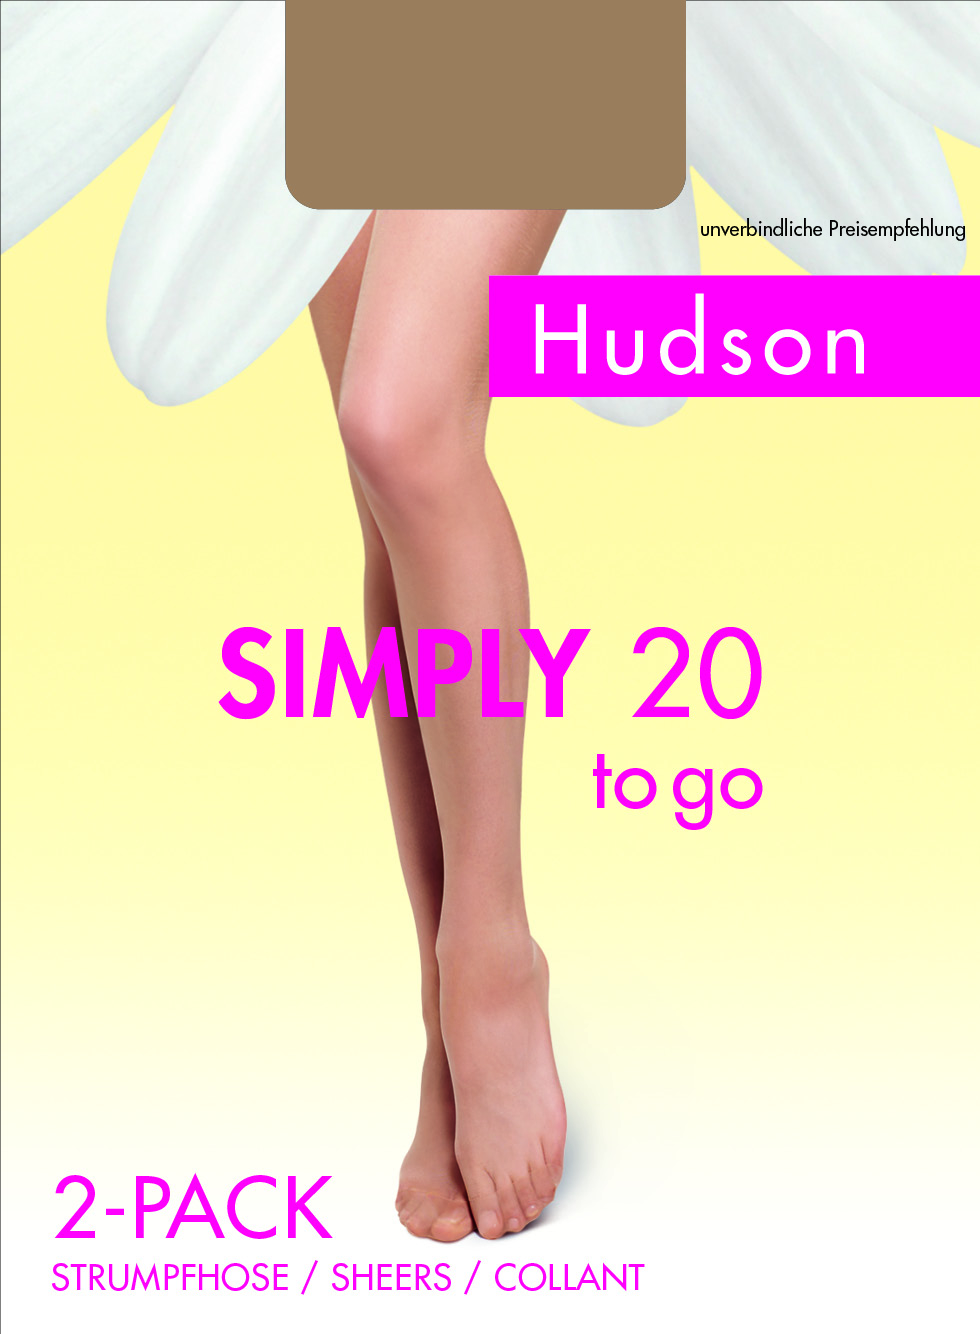 Hudson Simply 20 to go (LillyPut 20) Strumpfhose (10 Stück)